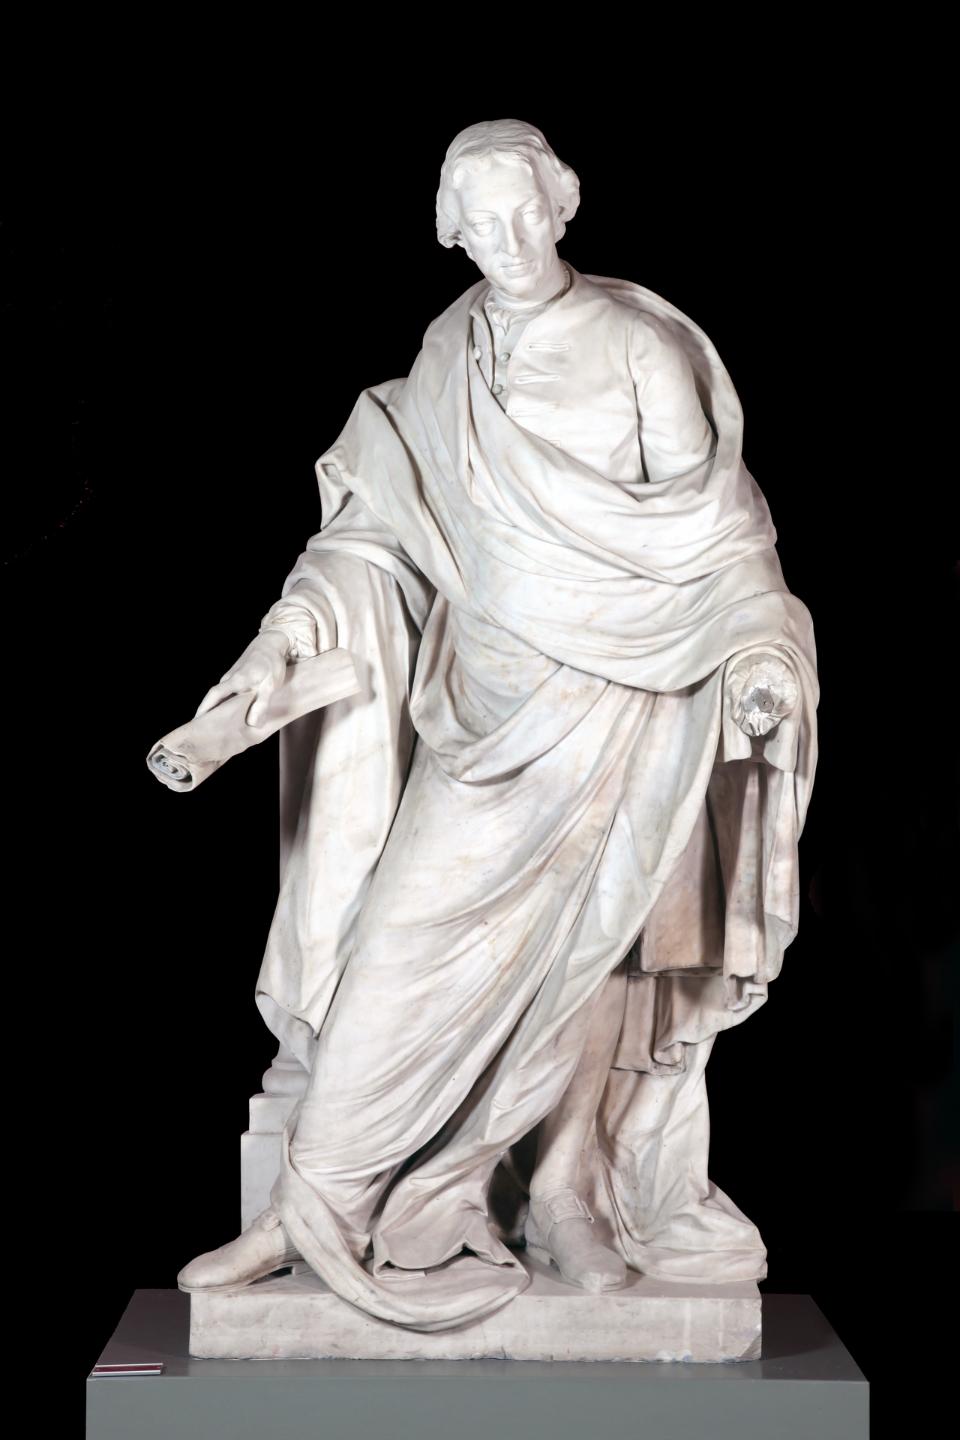 Joseph Wilton, William Pitt the Elder, eighteenth century, marble, H 191 cm, Presented, 1905.